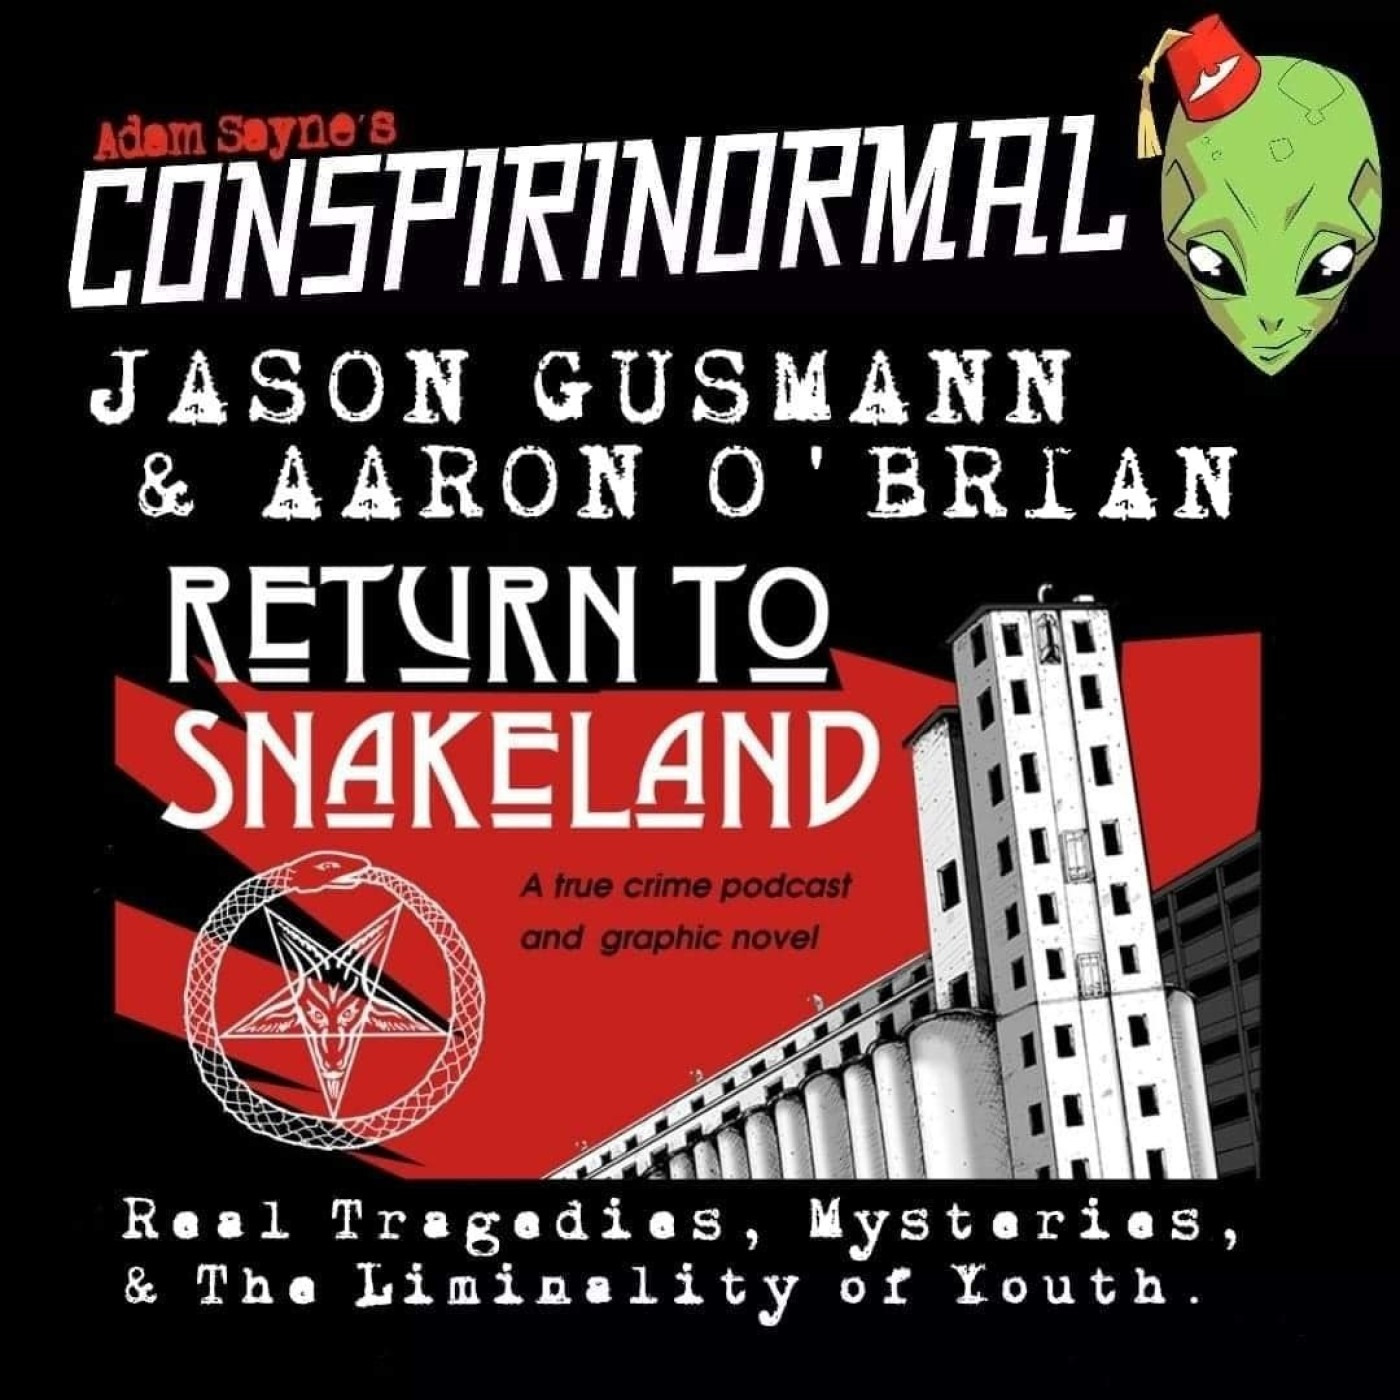 Consprinormal 367- Aaron O' Brian and Jason Gusmann (Return to Return to Snakeland)